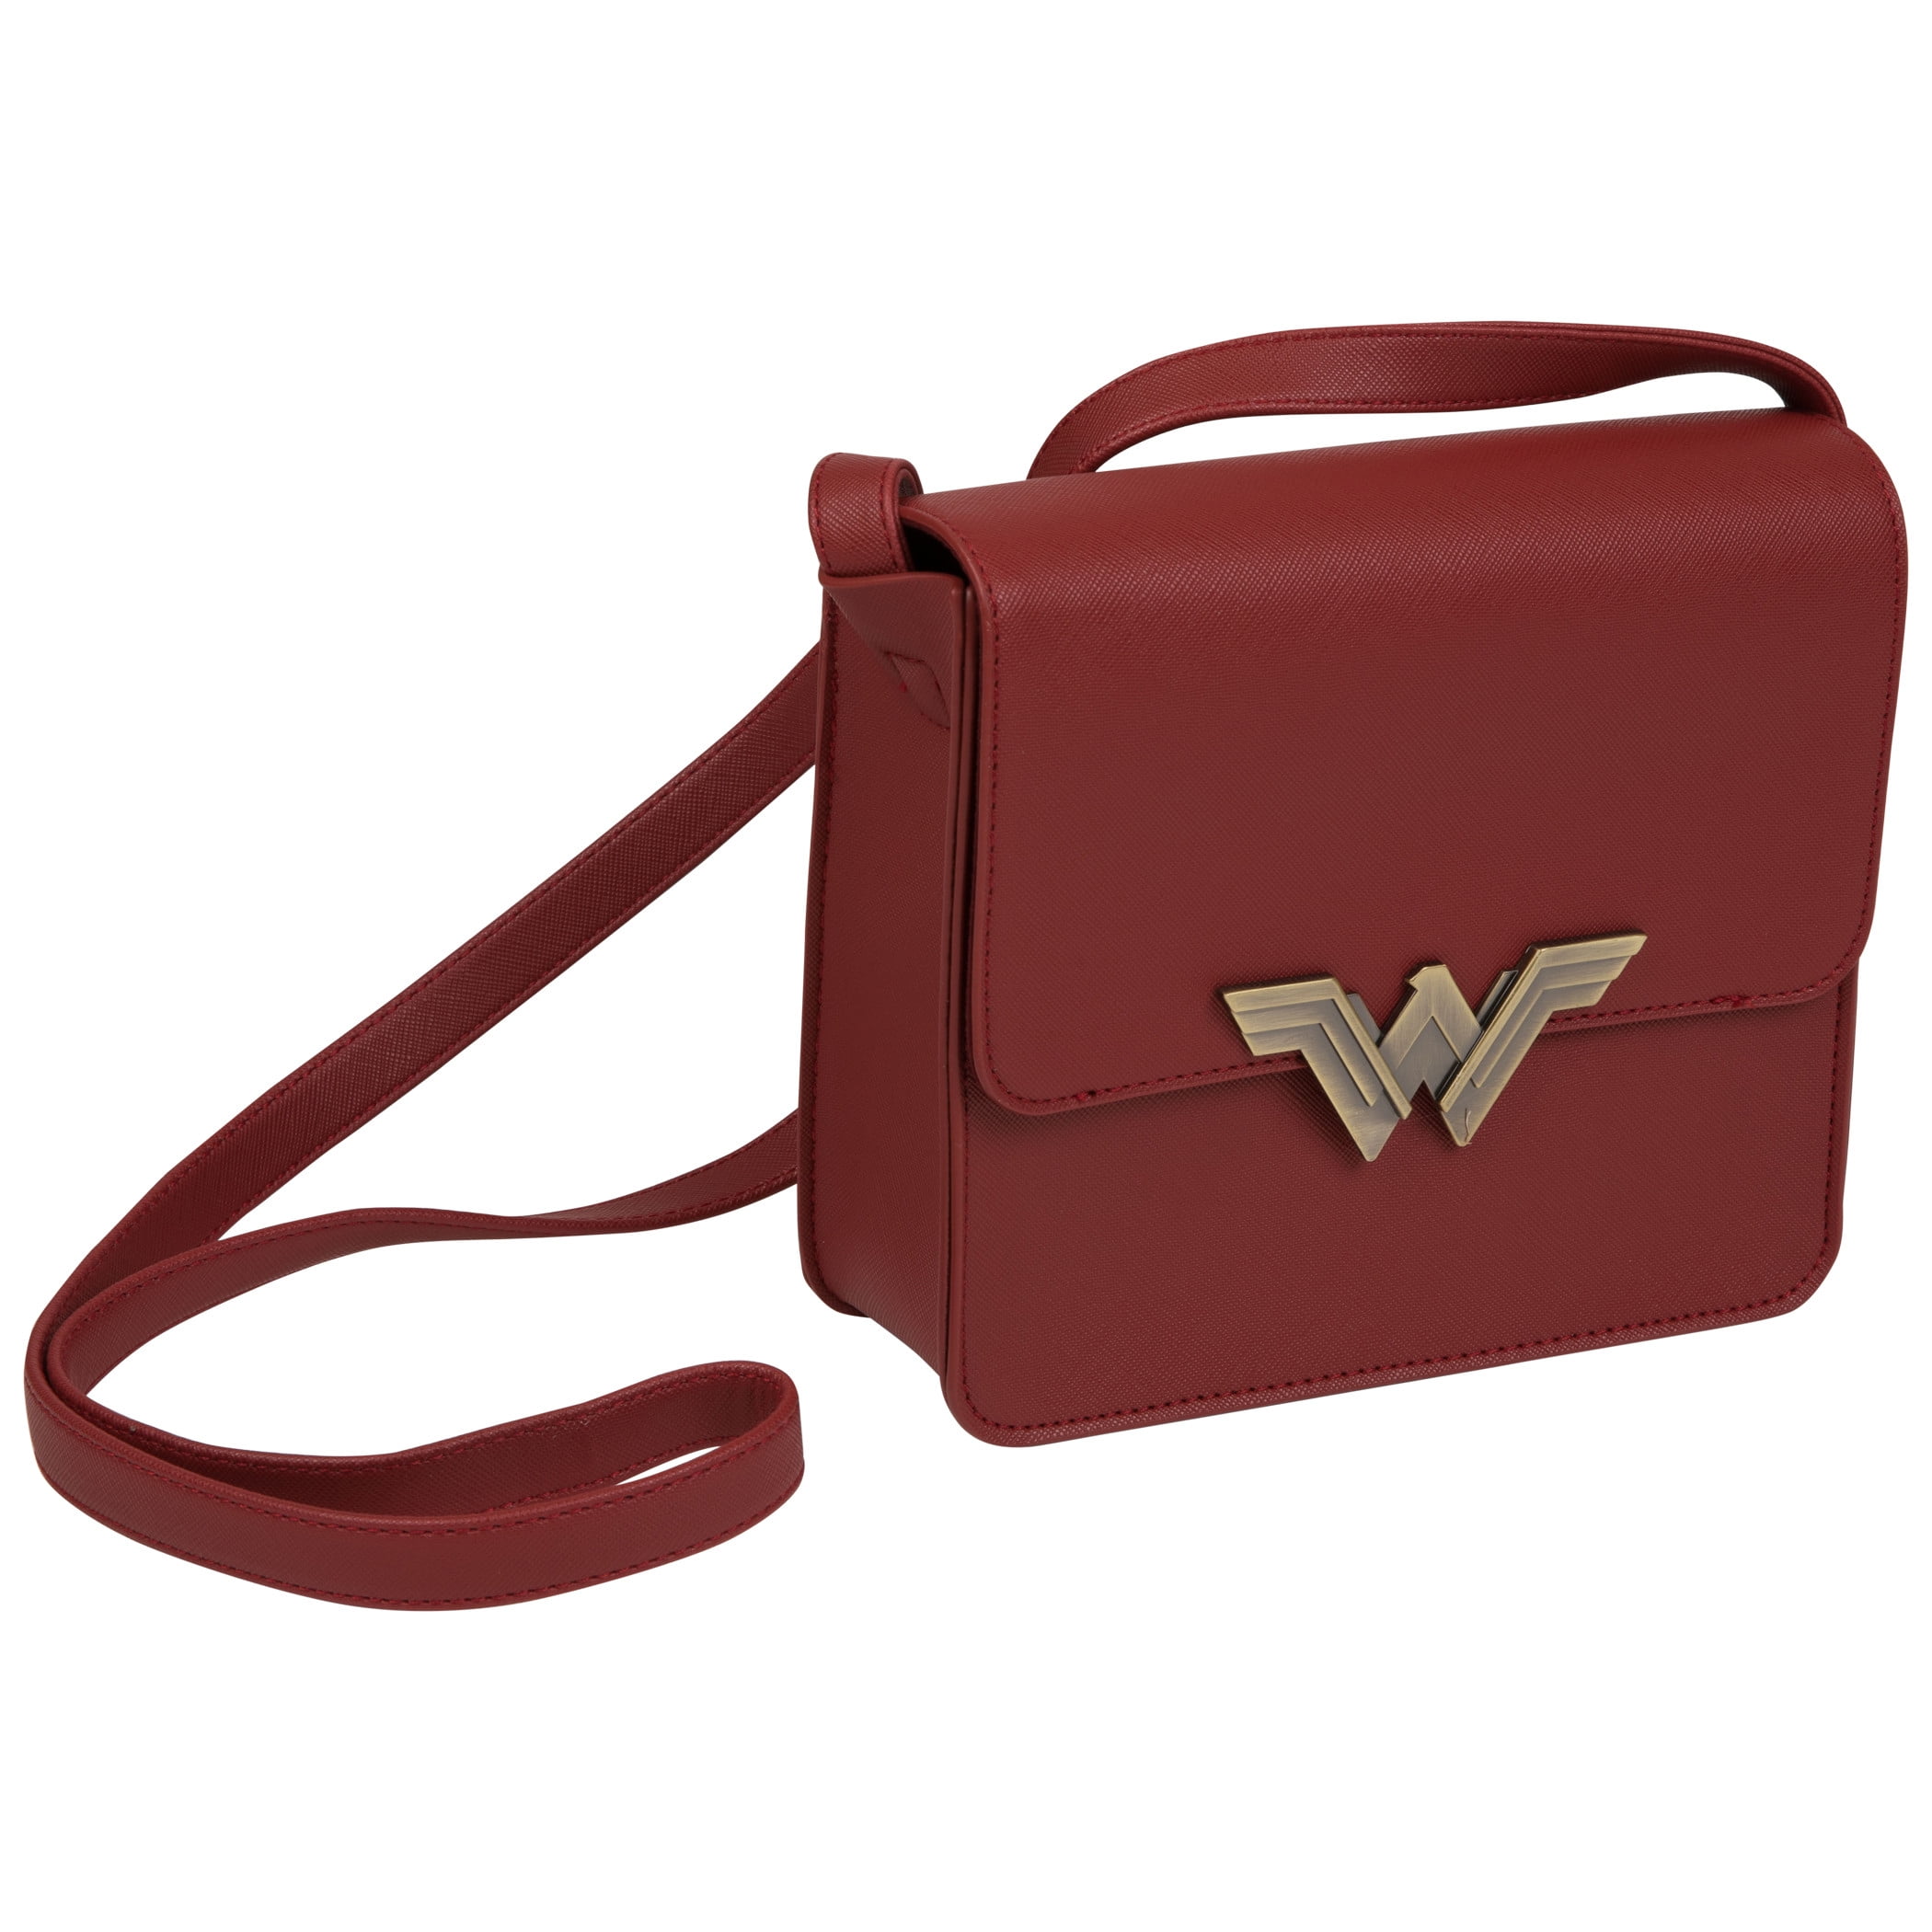 Bioworld Wonder Woman Costume Inspired Women's Handbag Multi: Handbags:  Amazon.com